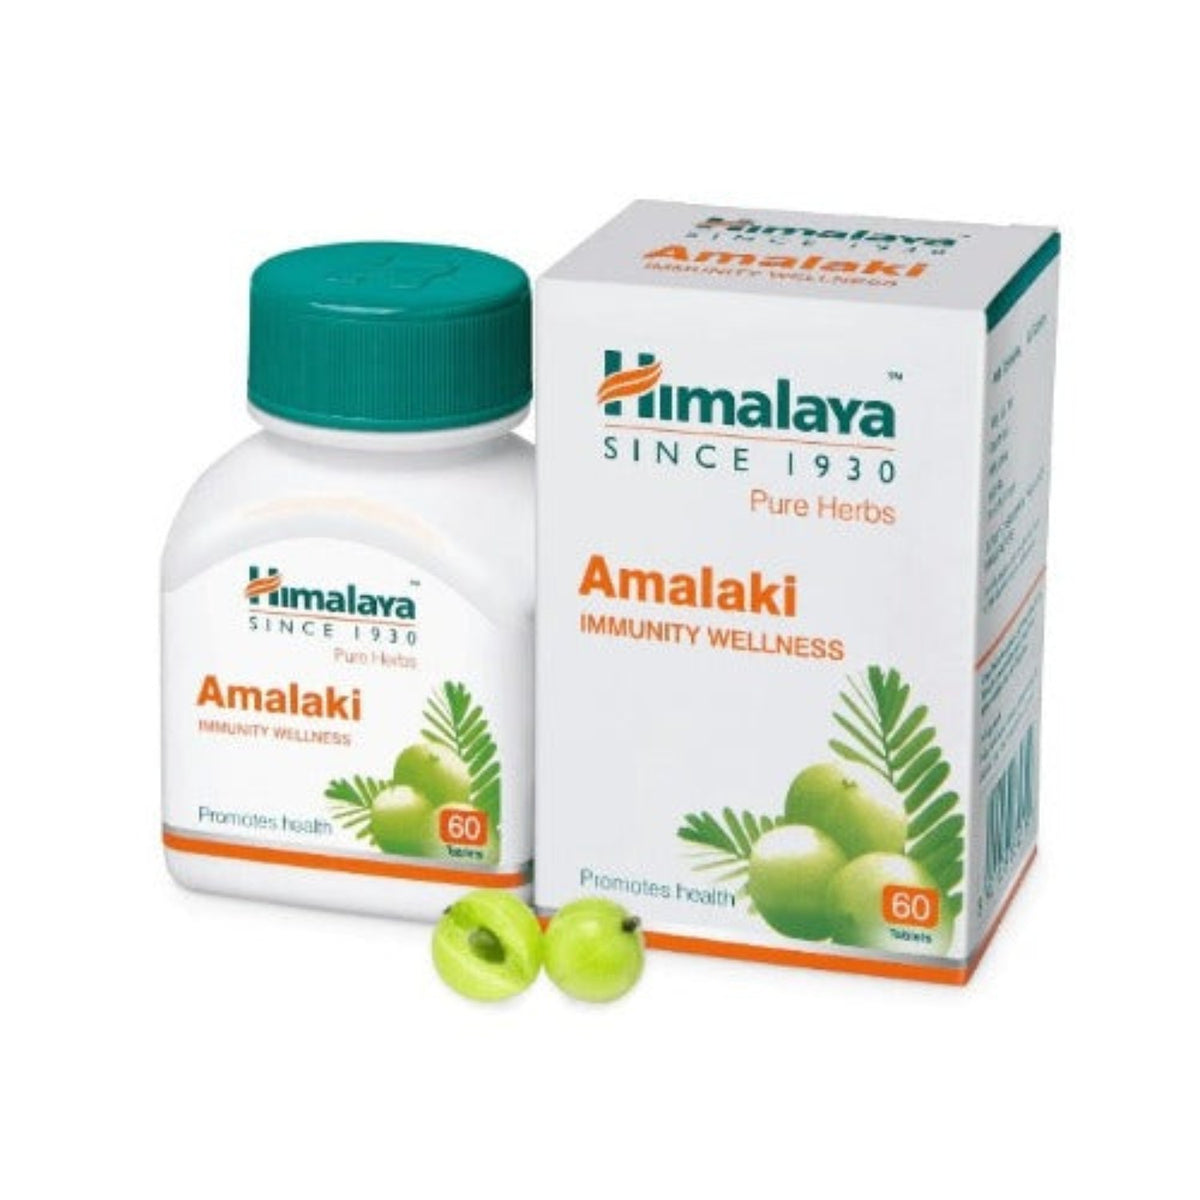 Himalaya Pure Herbs Immunity Wellness Травяной аюрведический препарат Амалаки для укрепления здоровья 60 таблеток